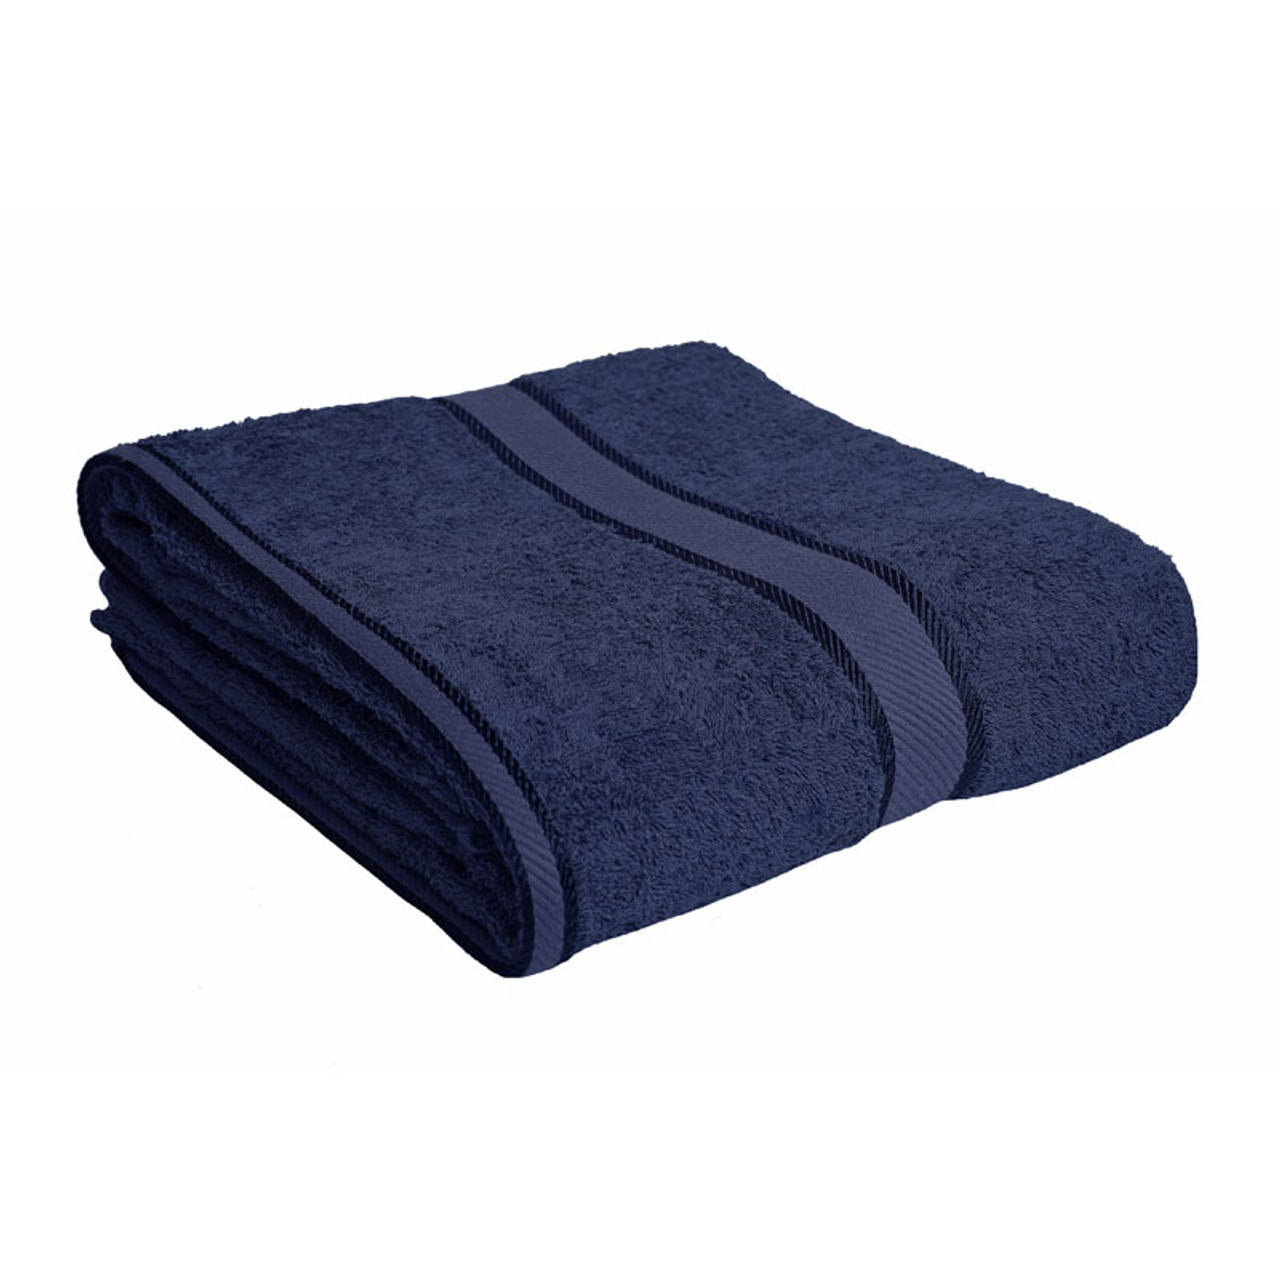 navy blue towels